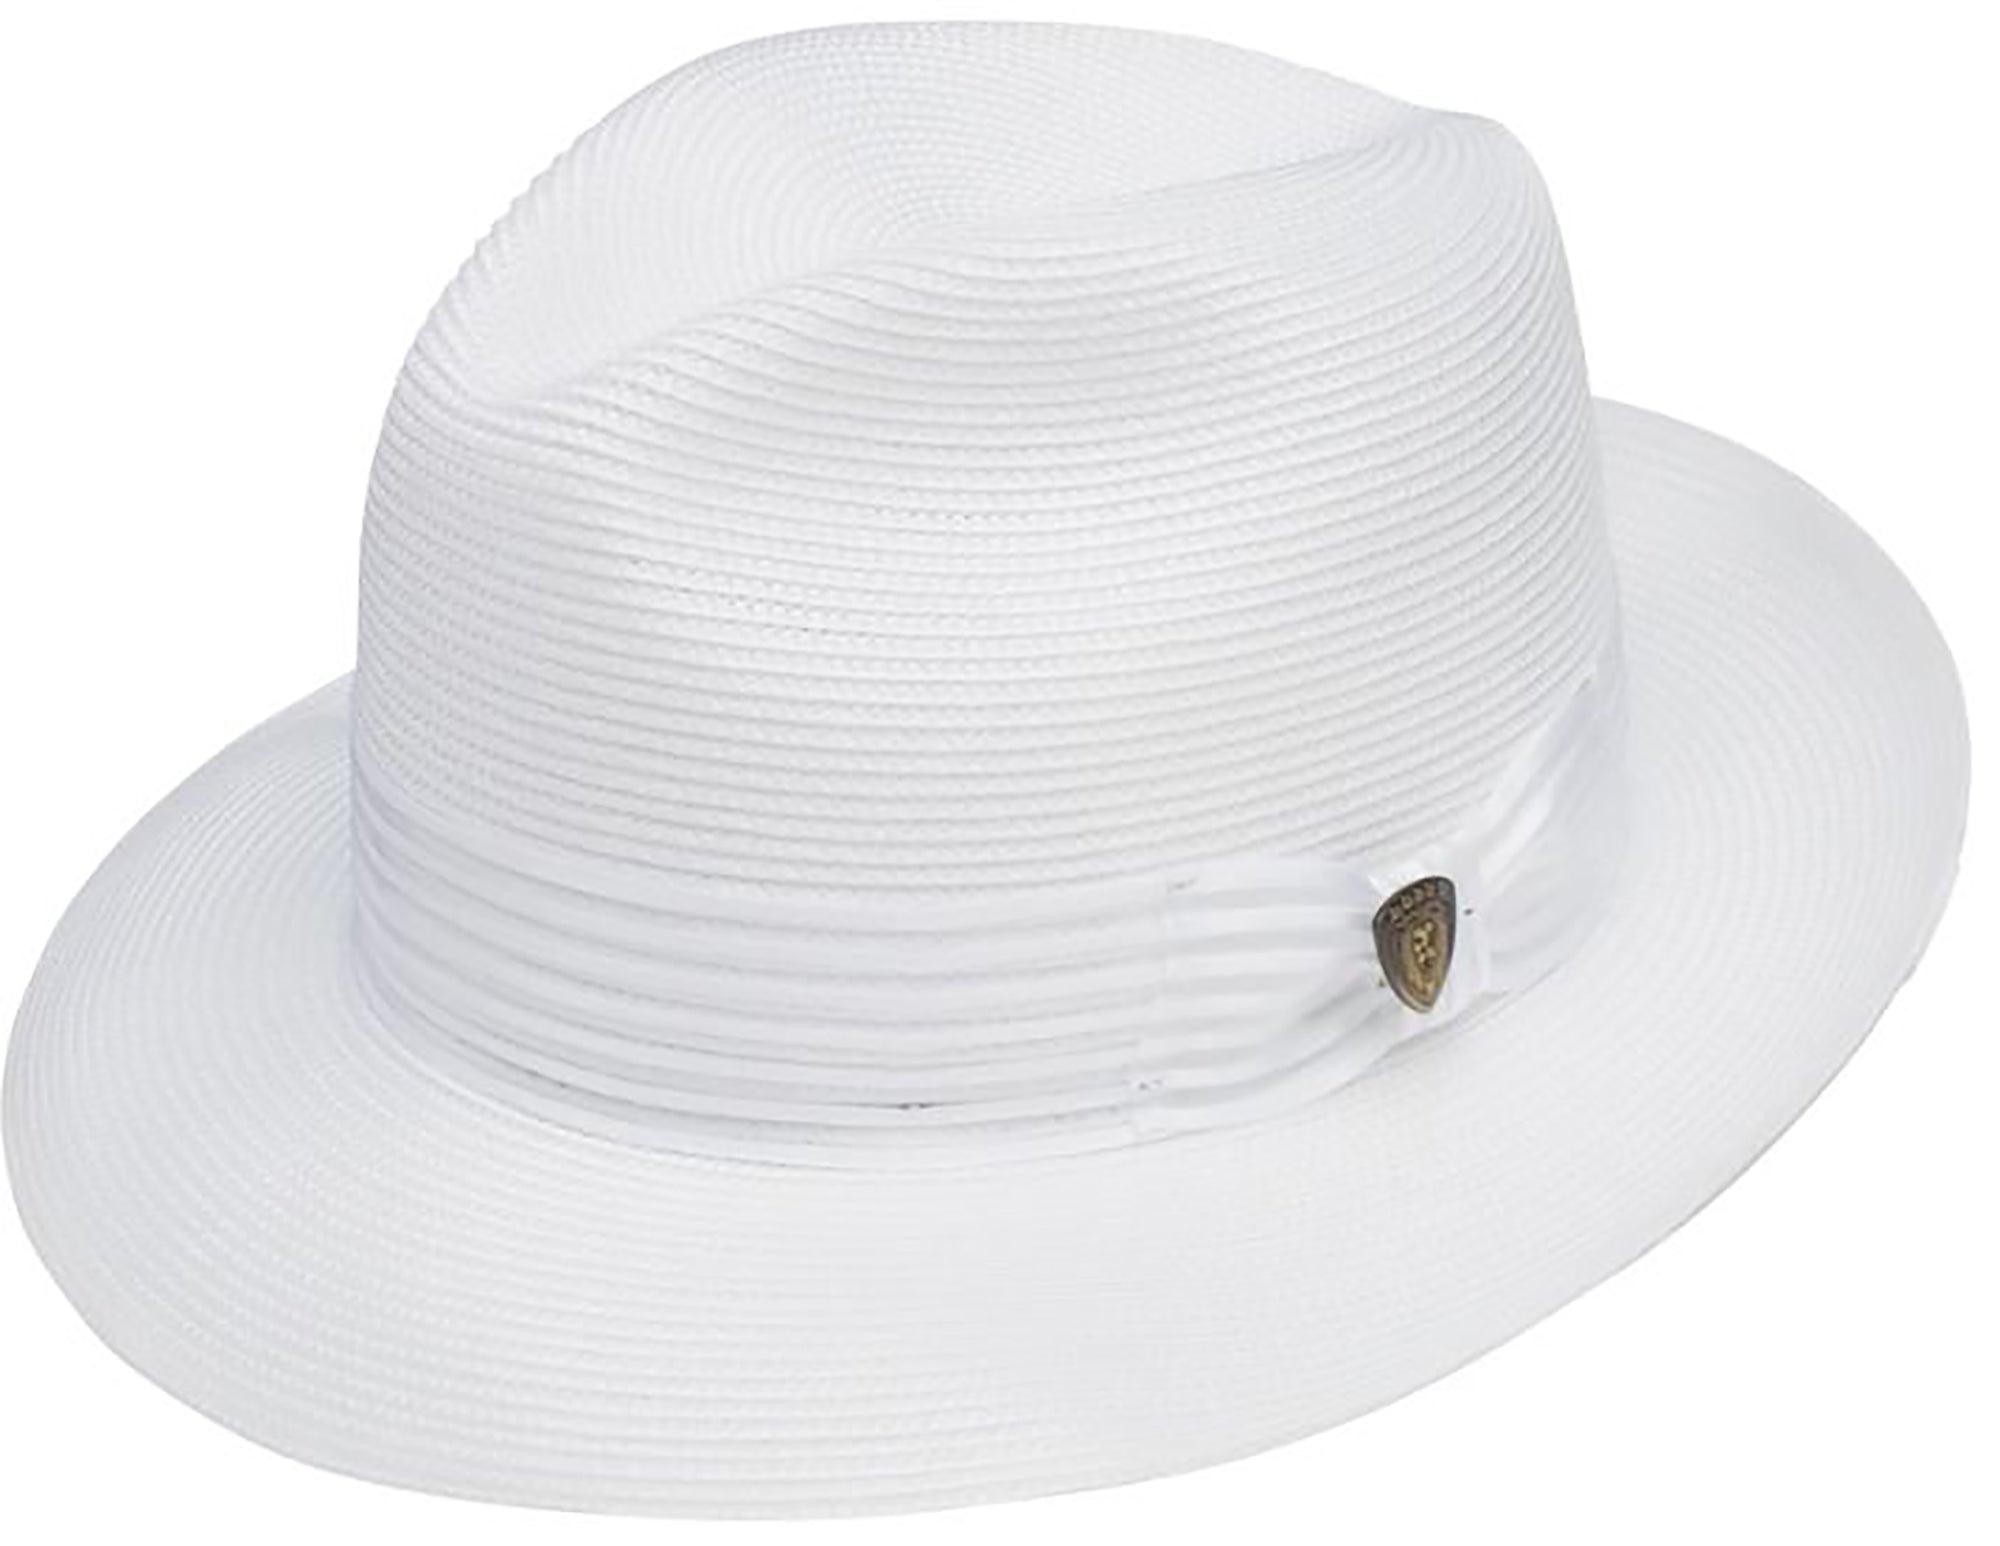 Dobbs Harrod Straw Hat